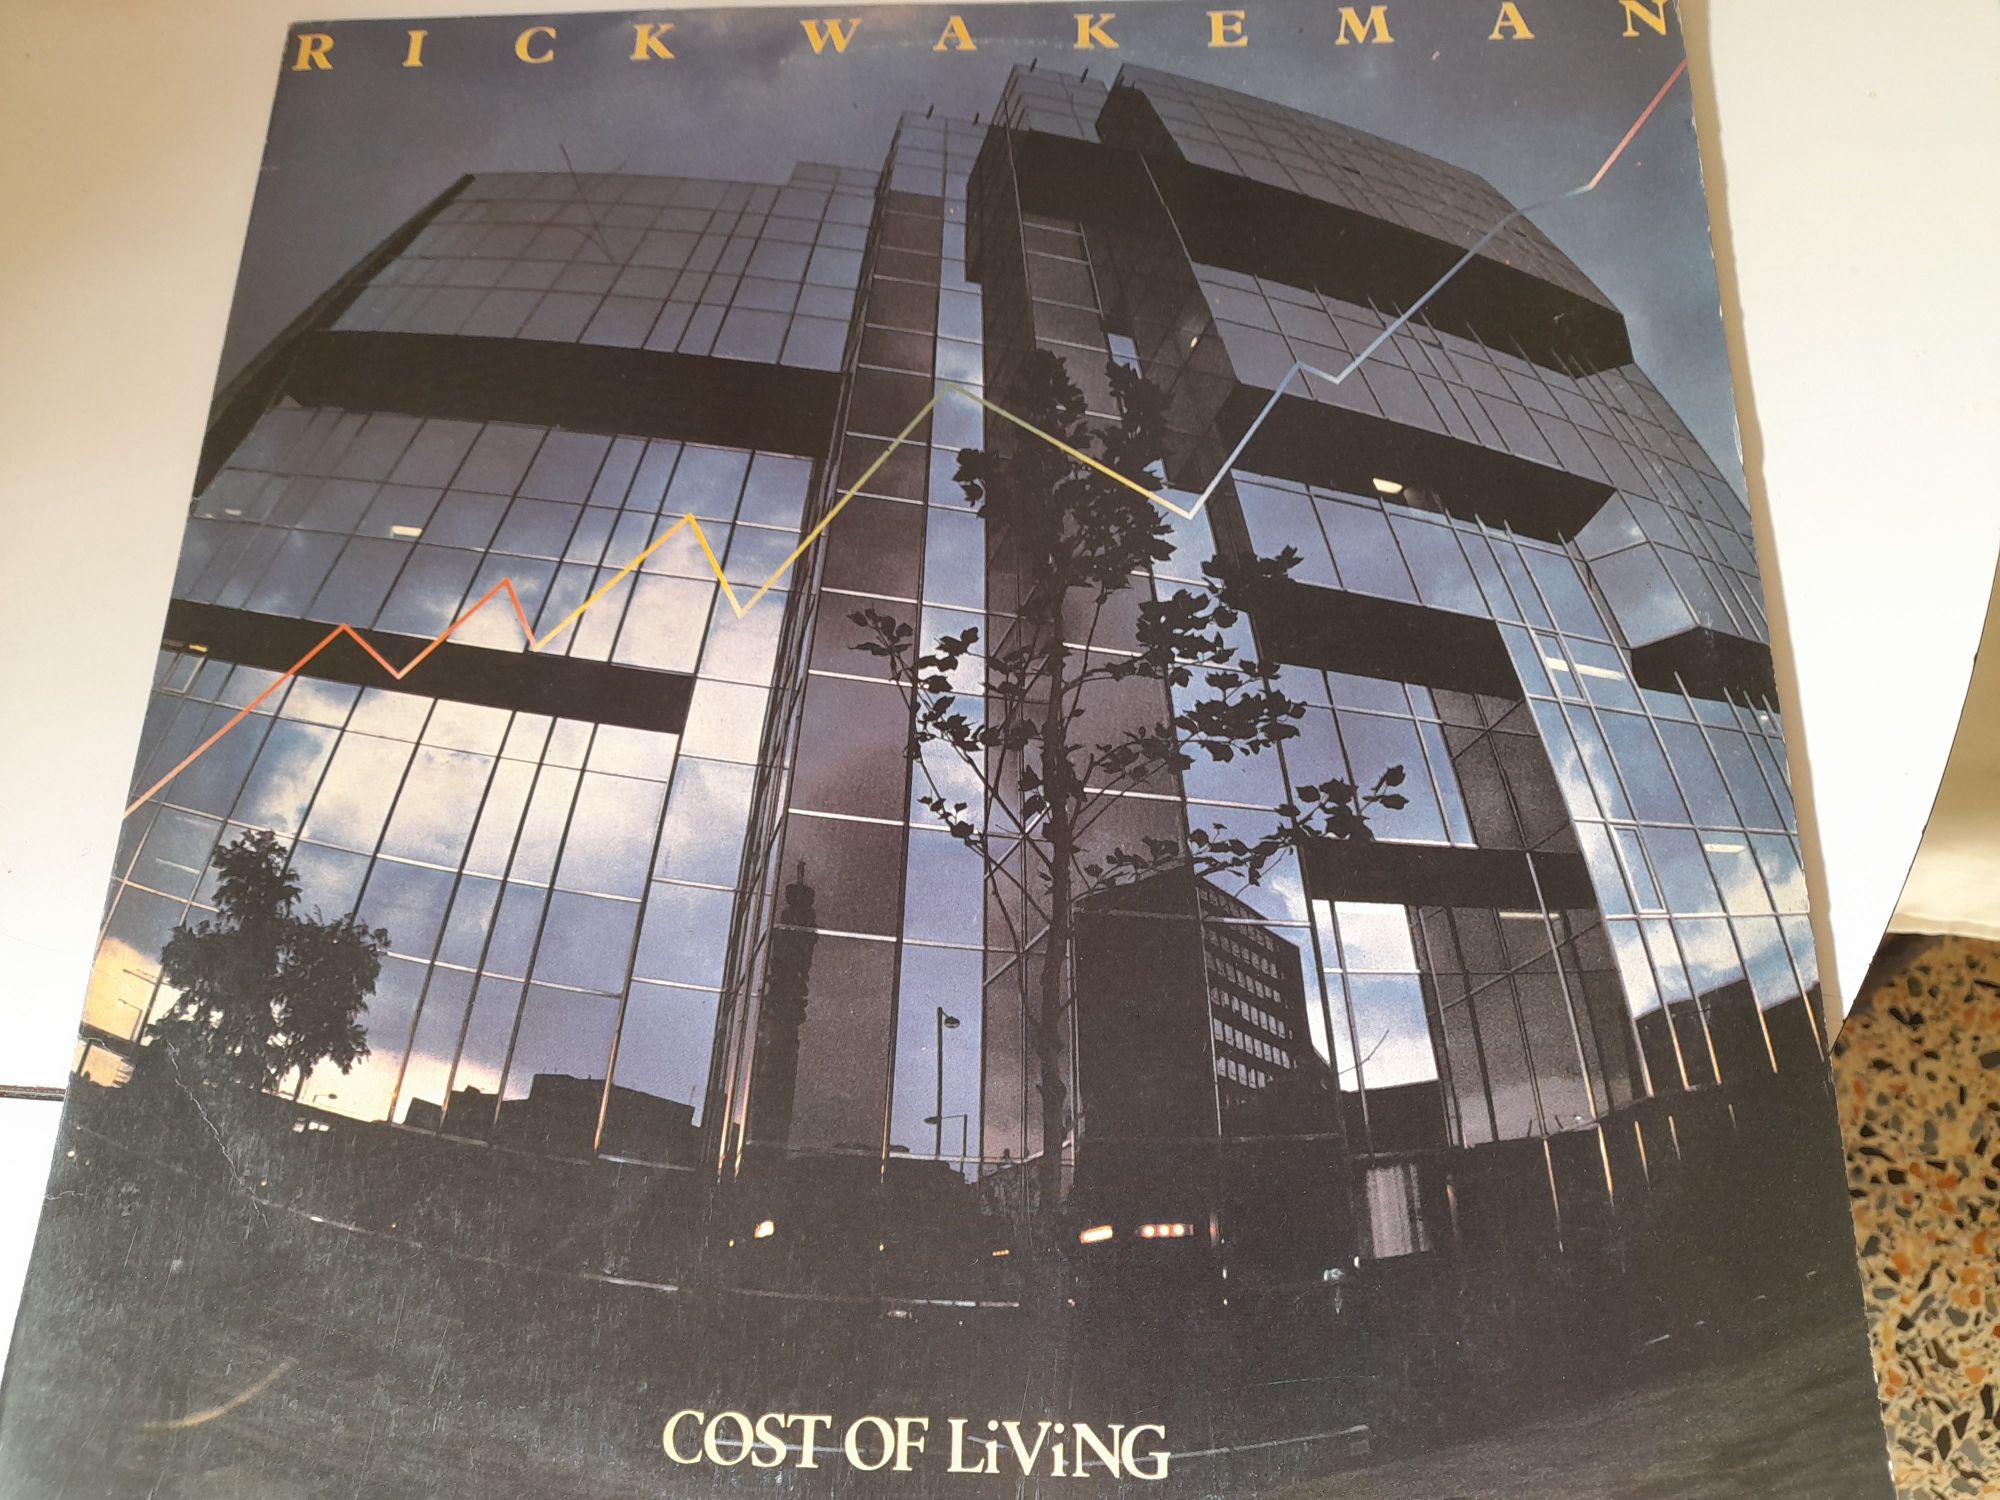 Lp Rick wakeman - Cost of Living - 1983